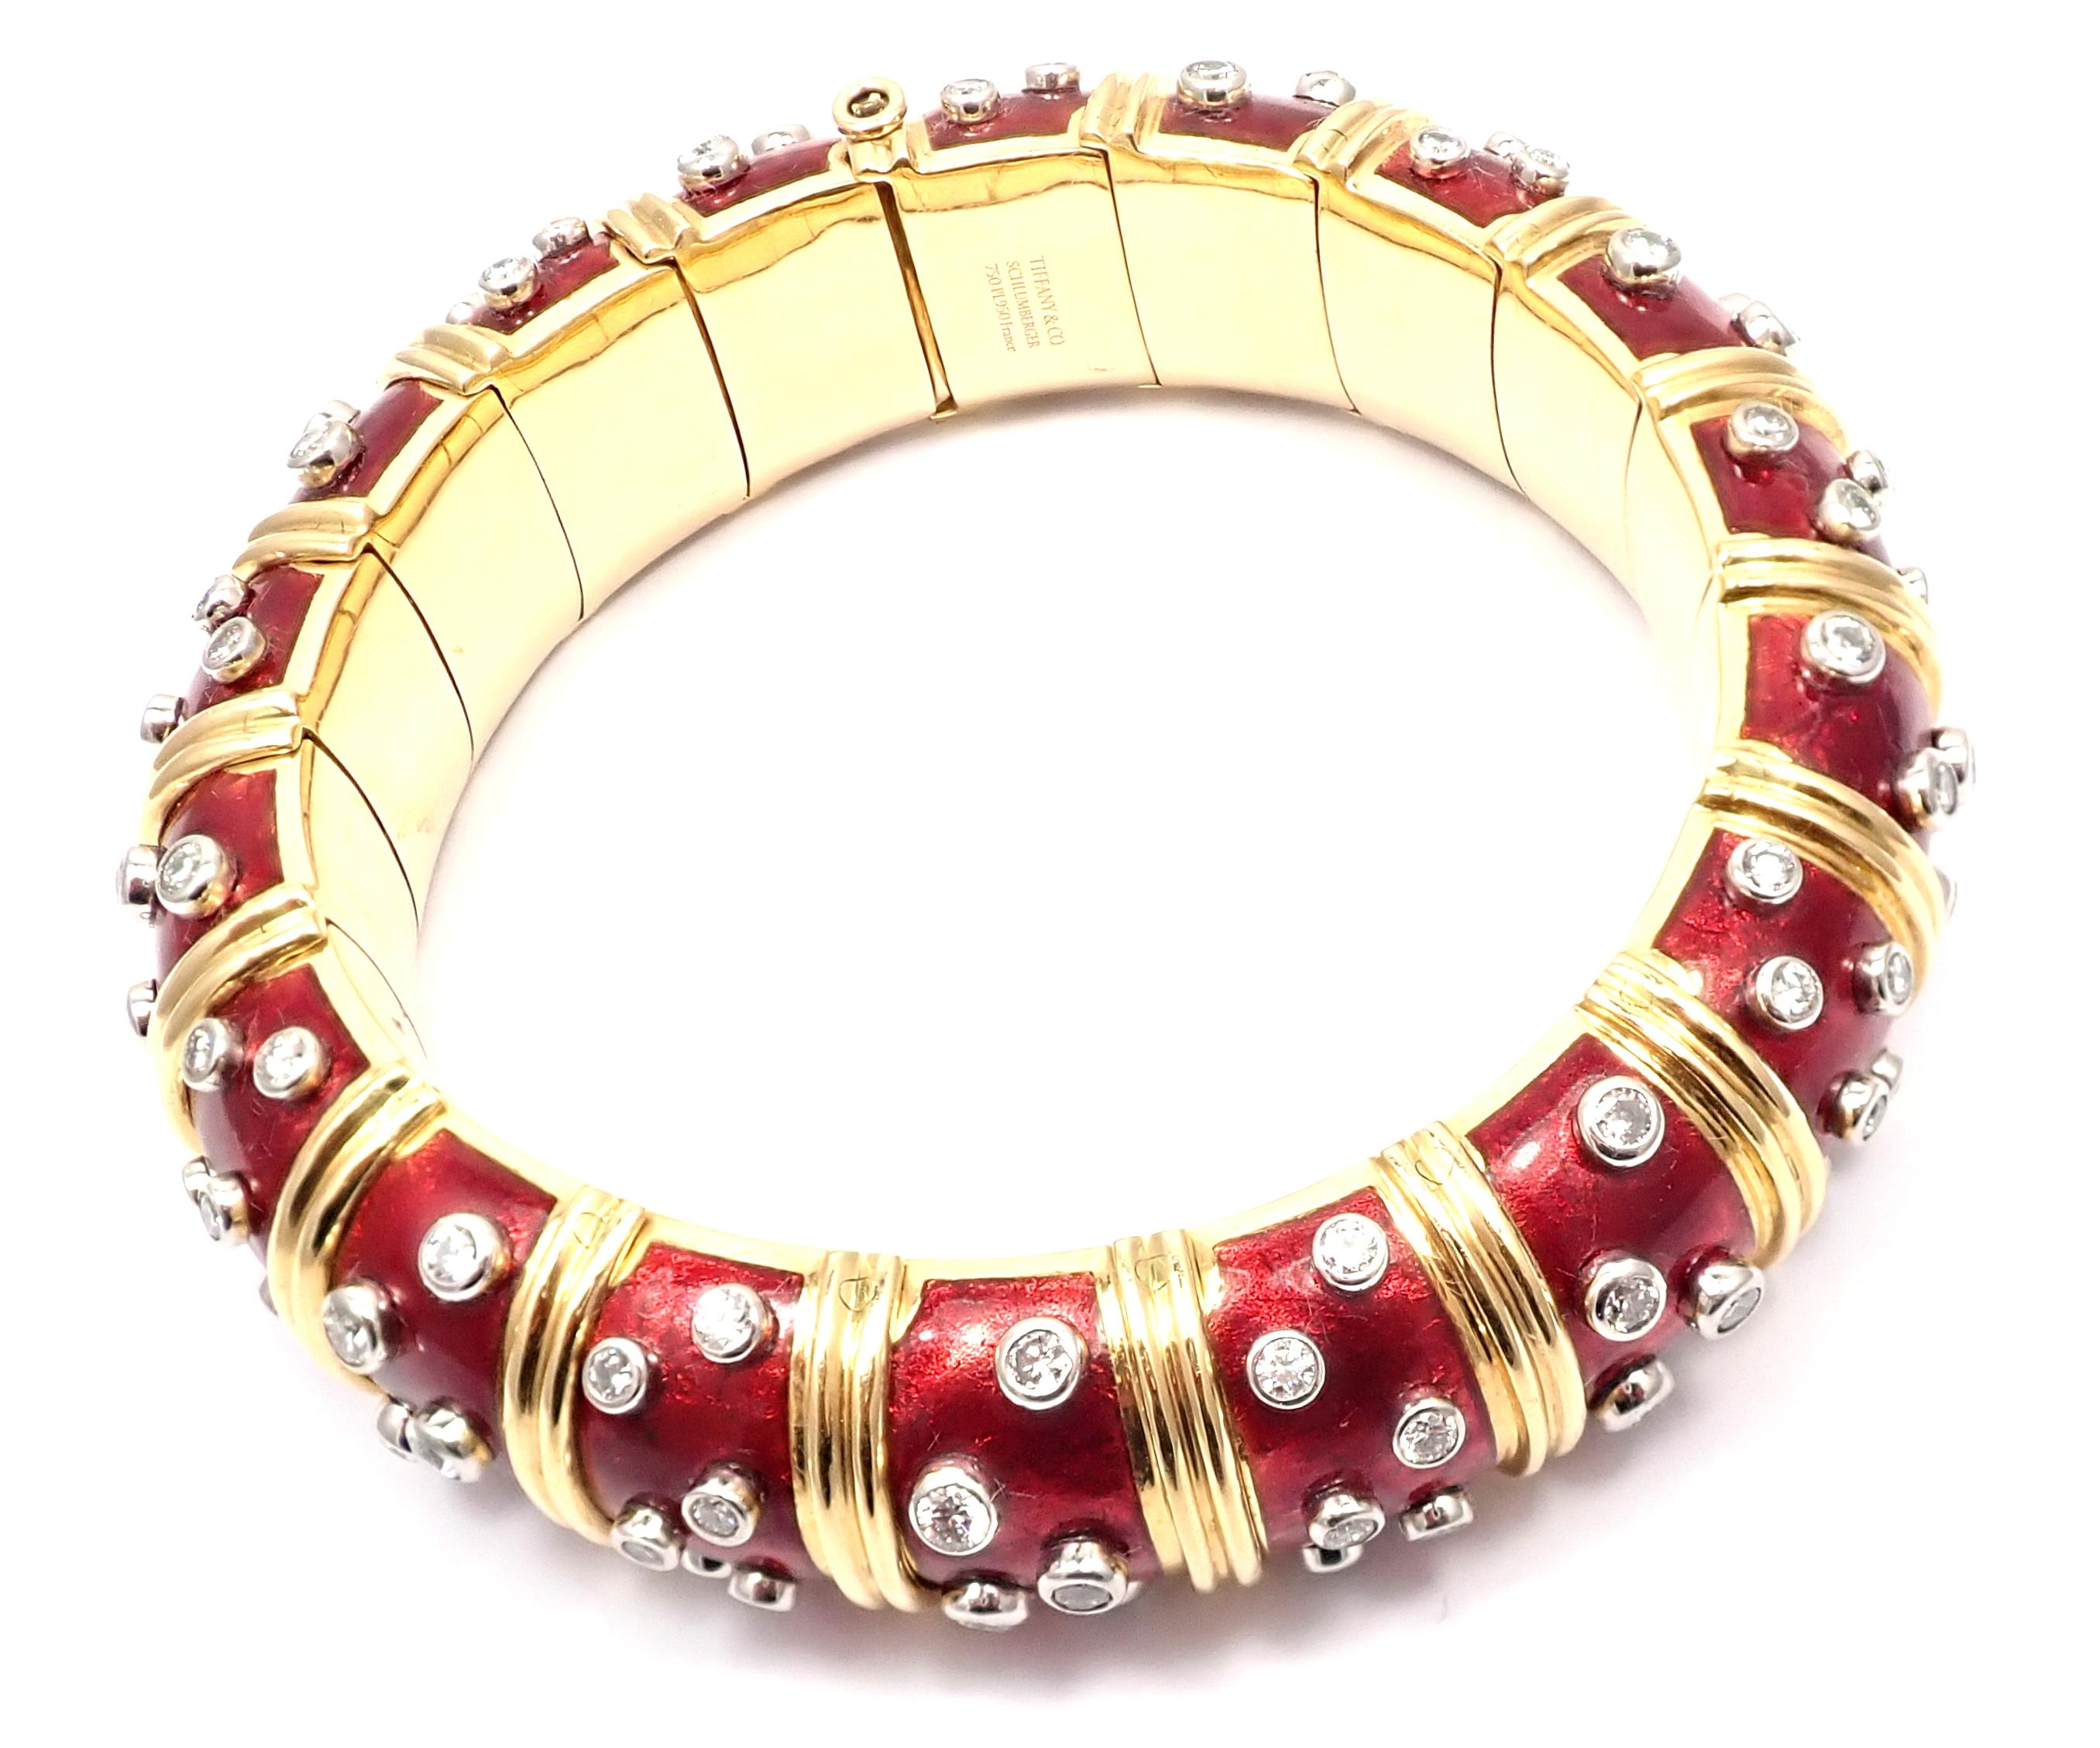 Tiffany & Co. Jean Schlumberger Paillonne Red Enamel Yellow Gold Bangle Bracelet 1